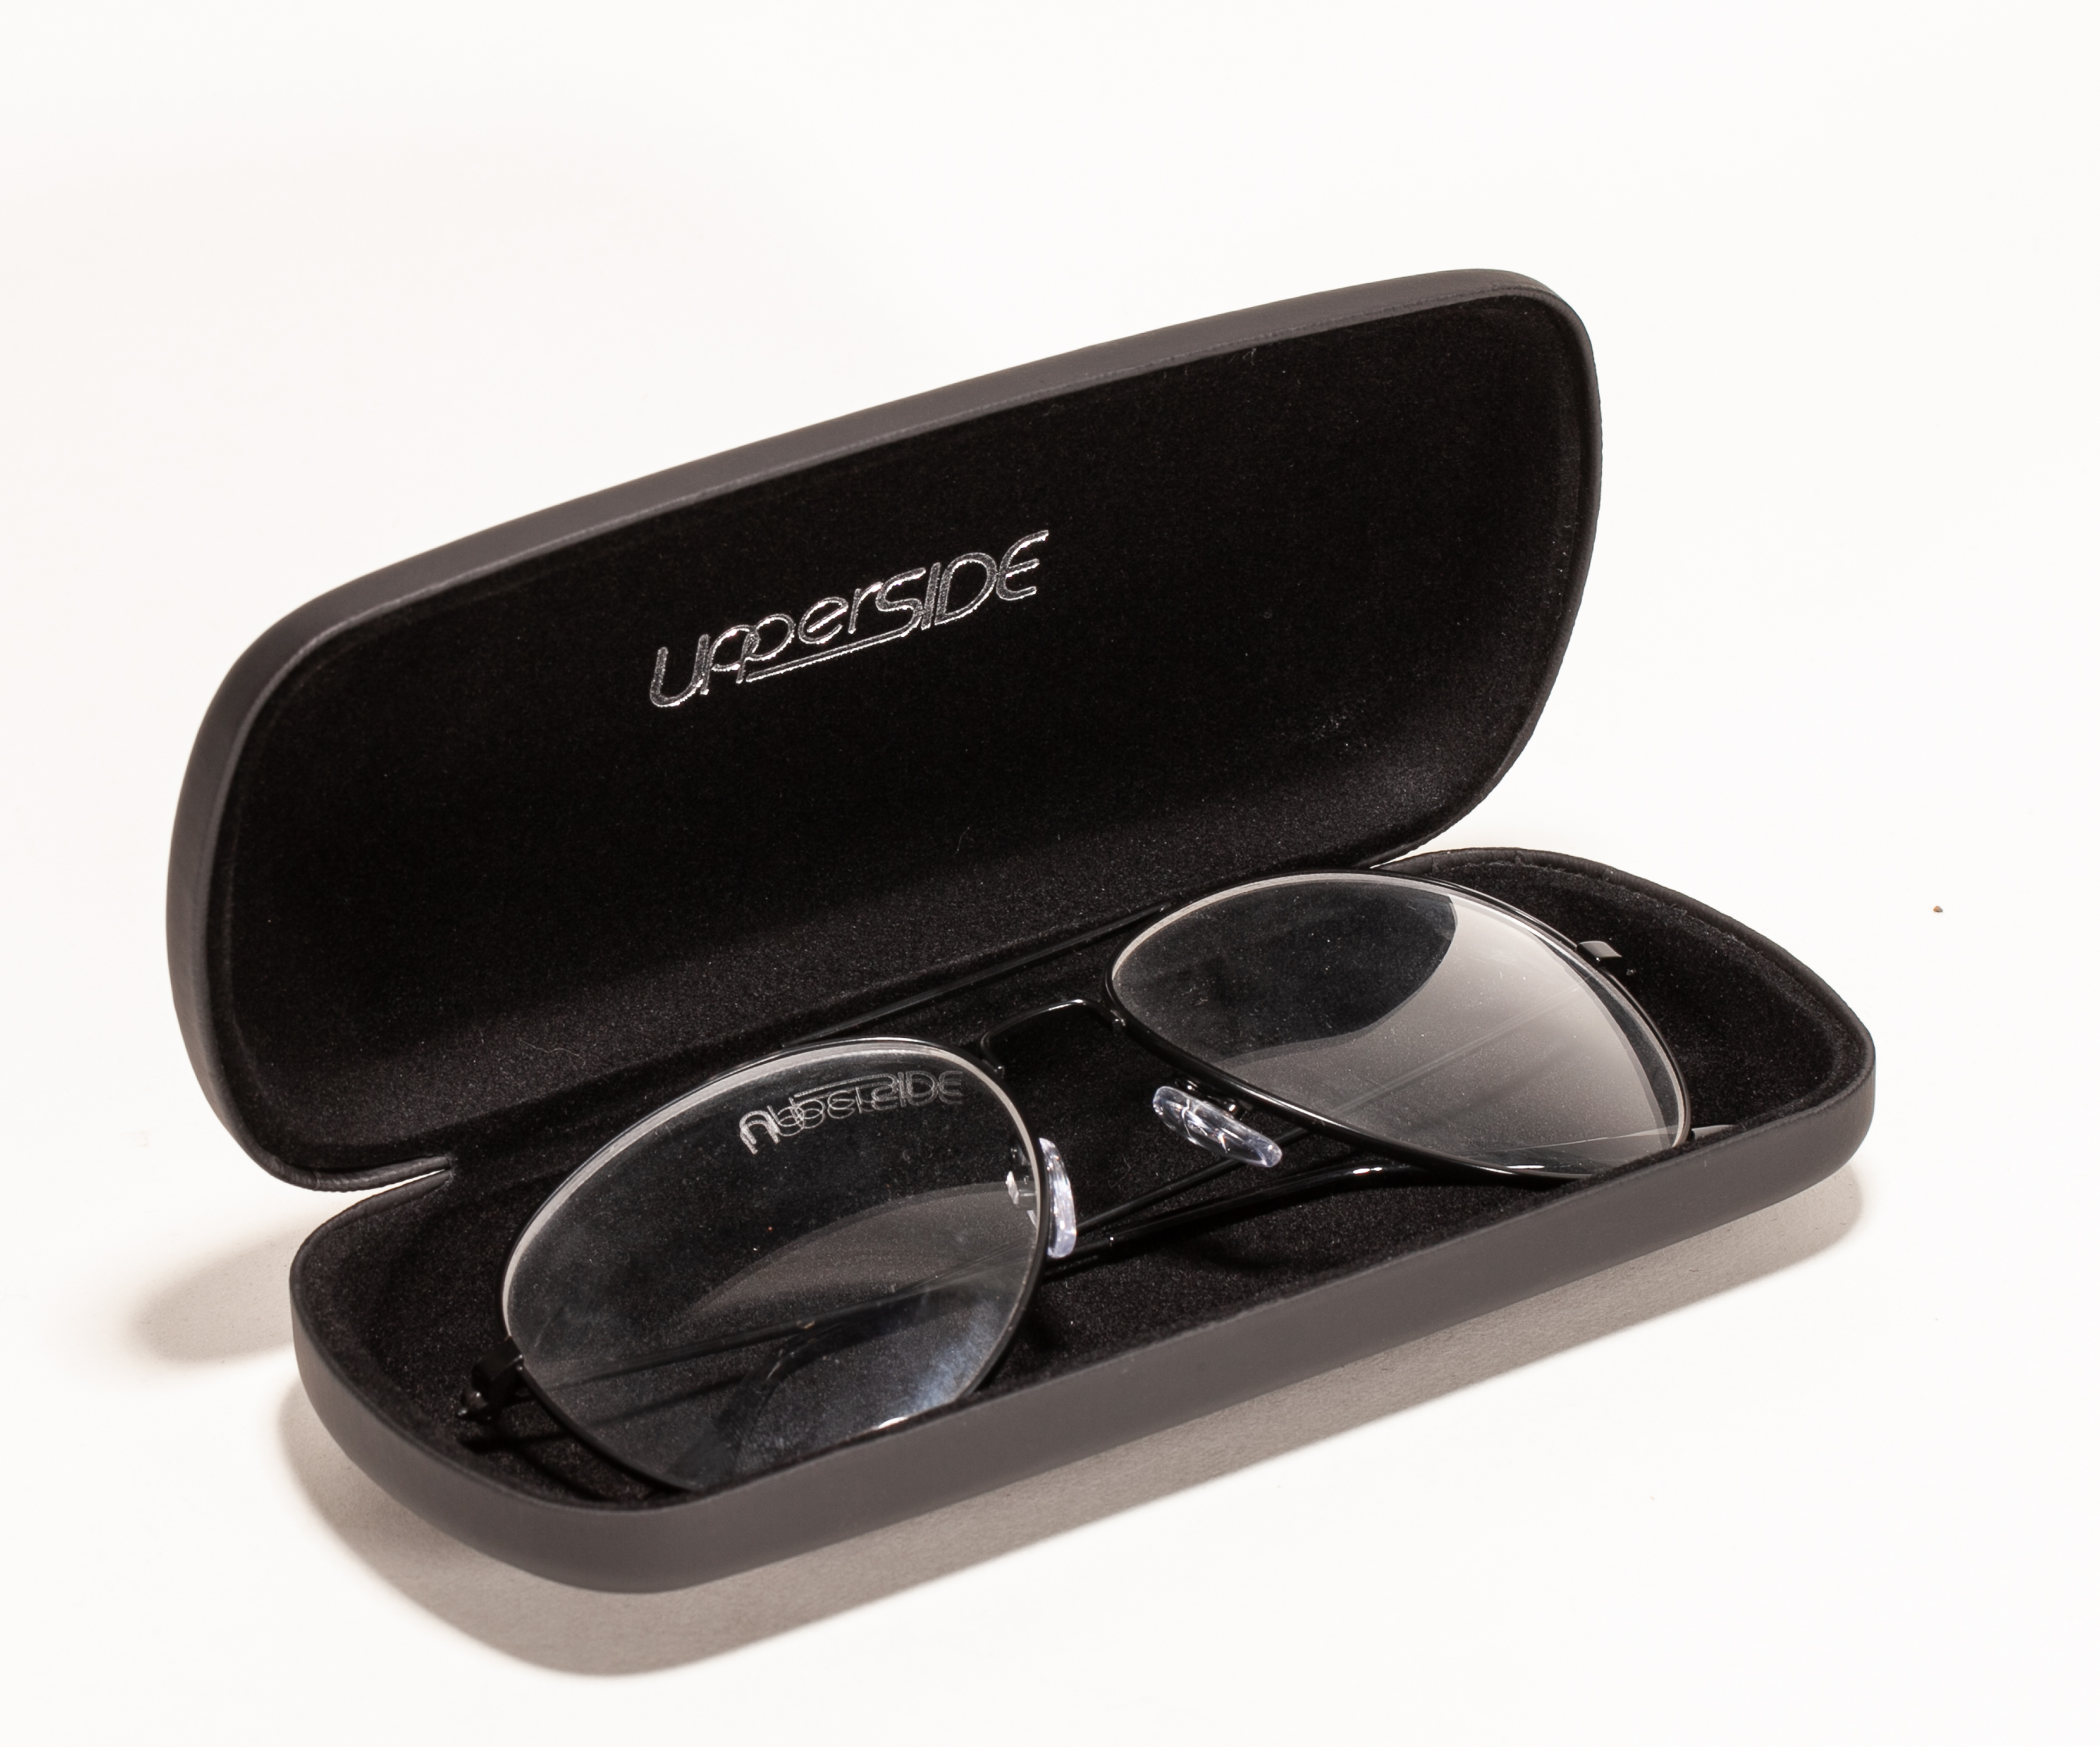 2021 Sunglasses, Black, LOGO Printed Glasses Case